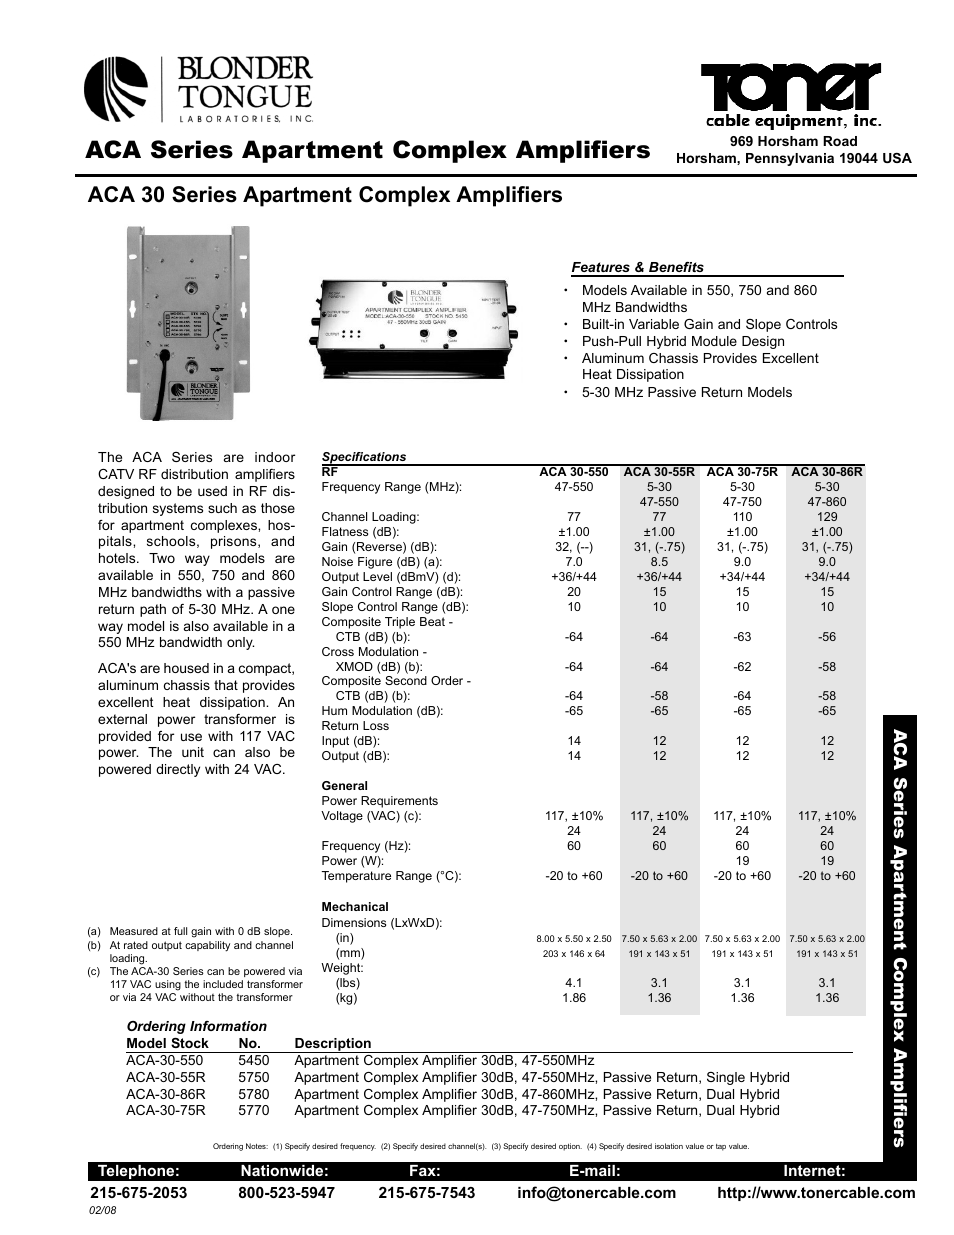 ACA-30-55R 5750 ACA Series CATV RF Distribution Amplifier